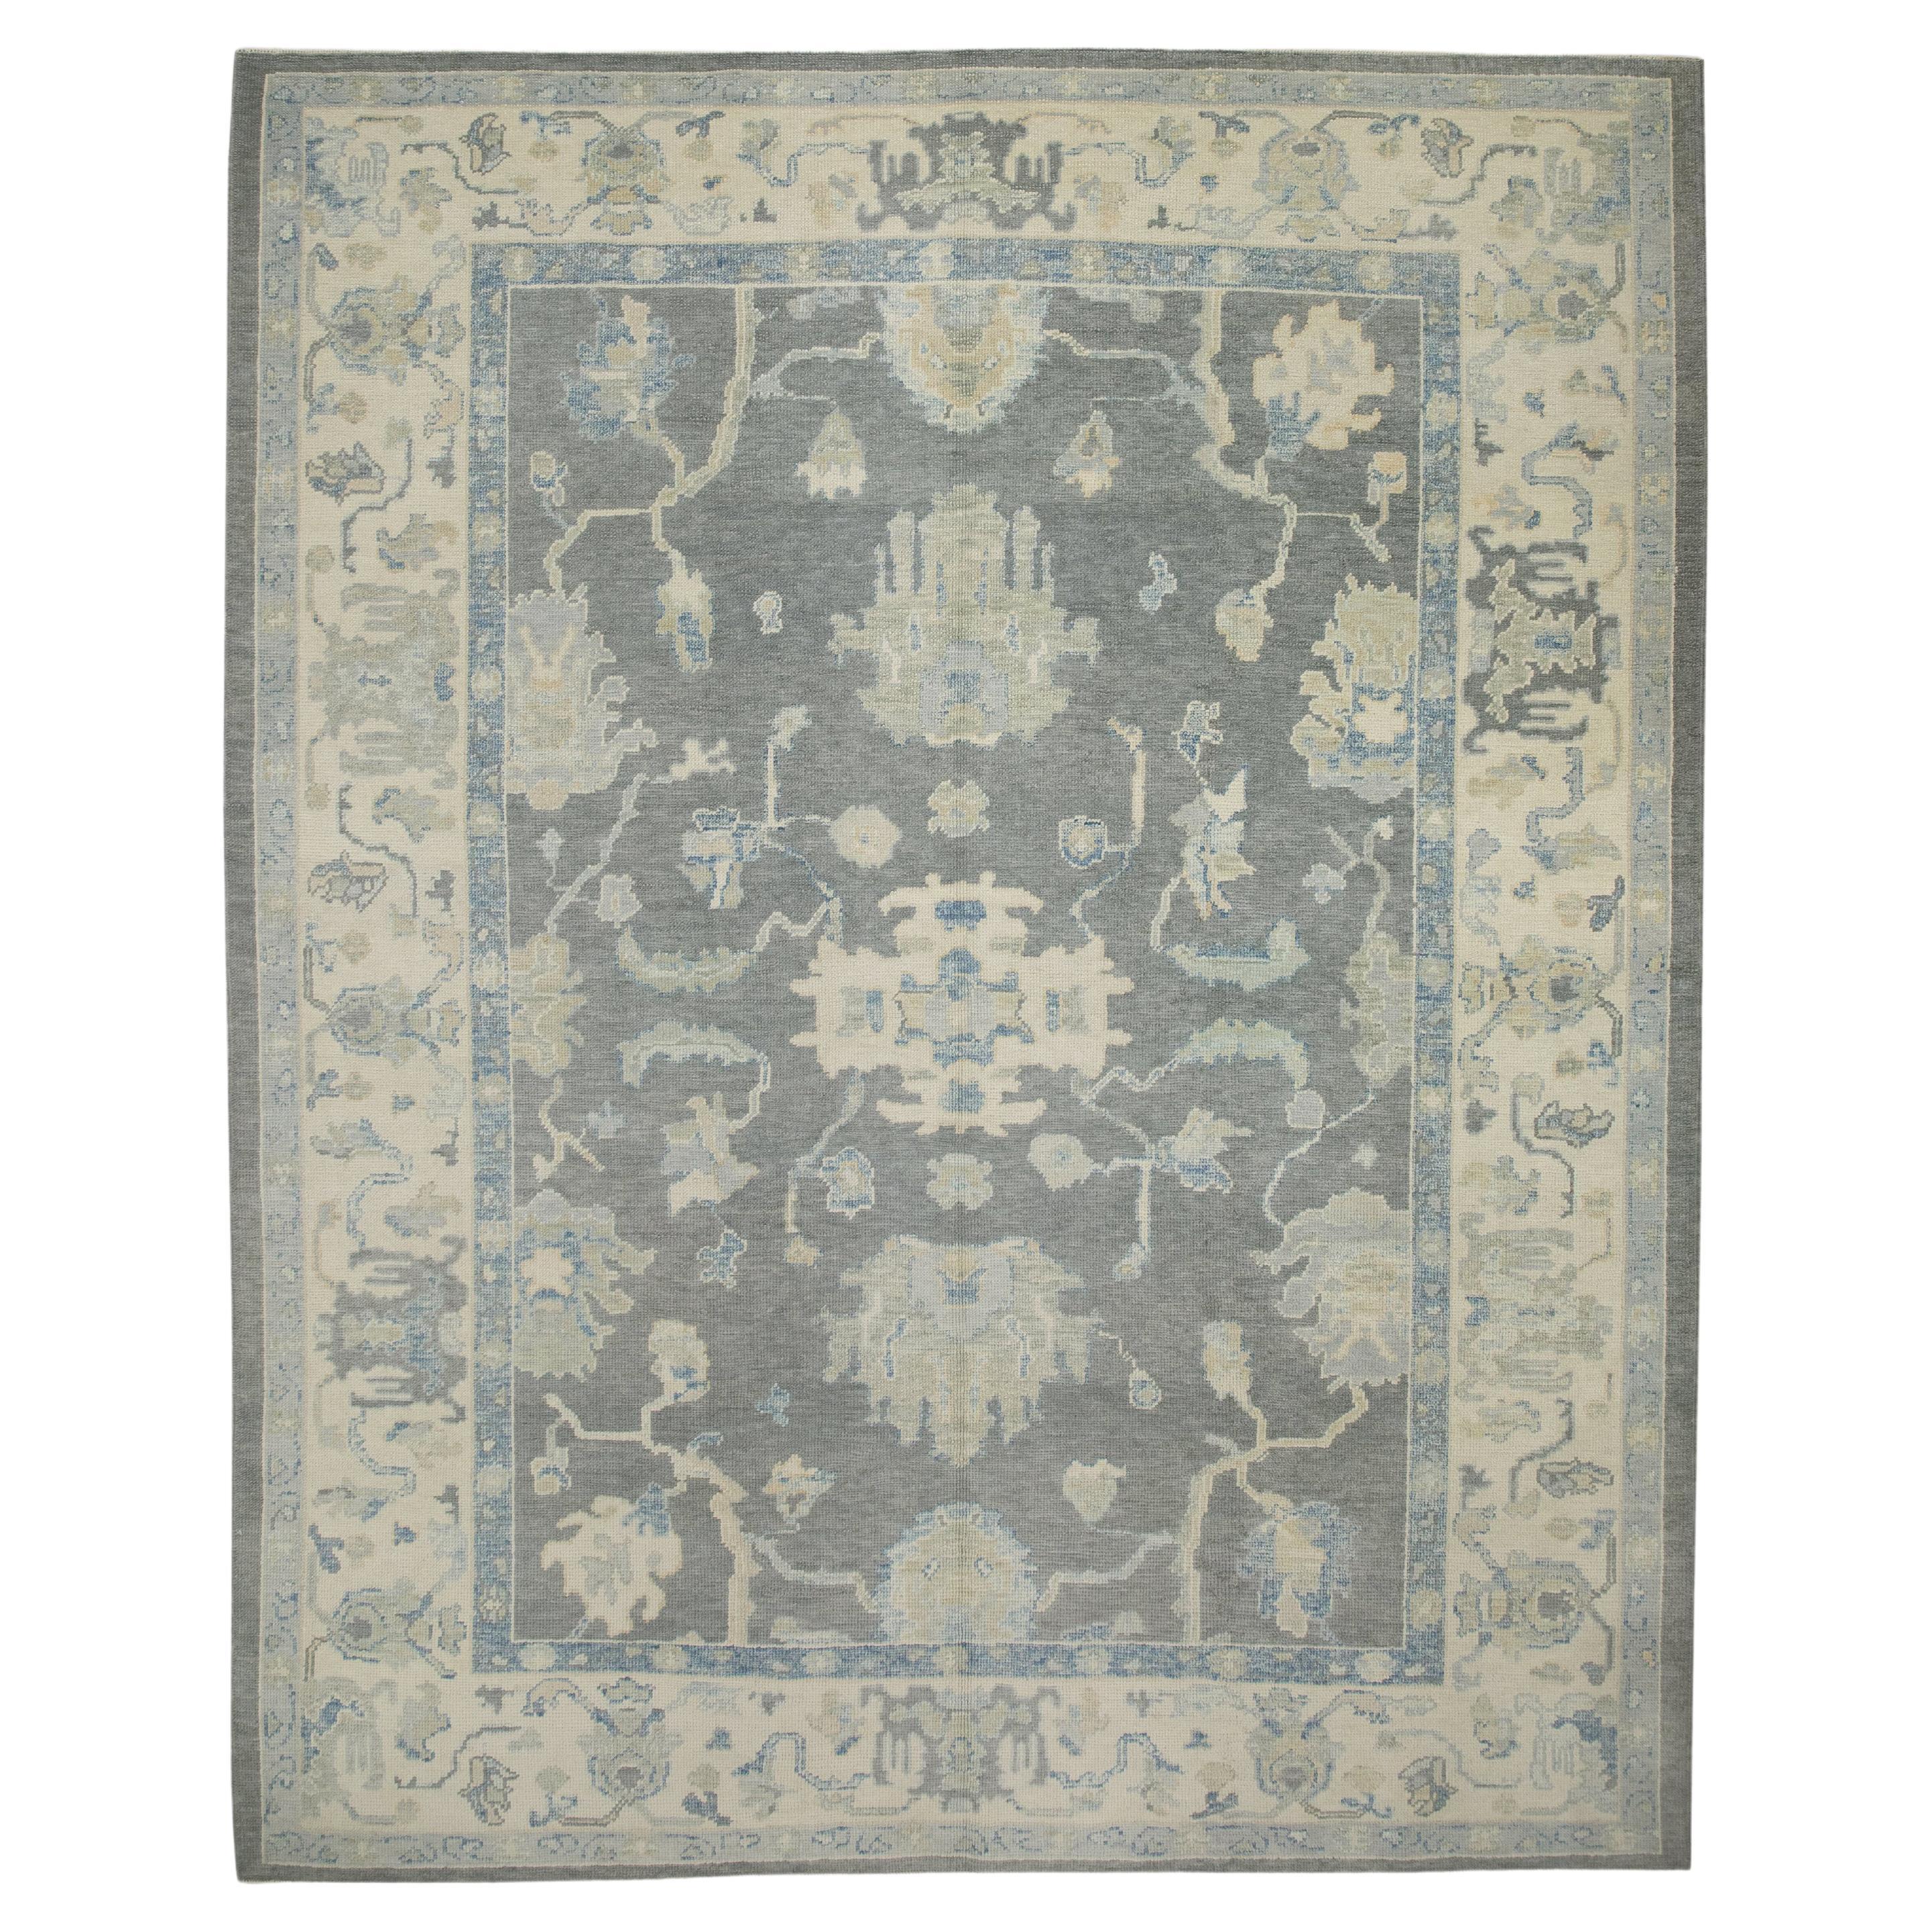 Gray & Blue Floral Design Handwoven Wool Turkish Oushak Rug 8'4" x 10'1"